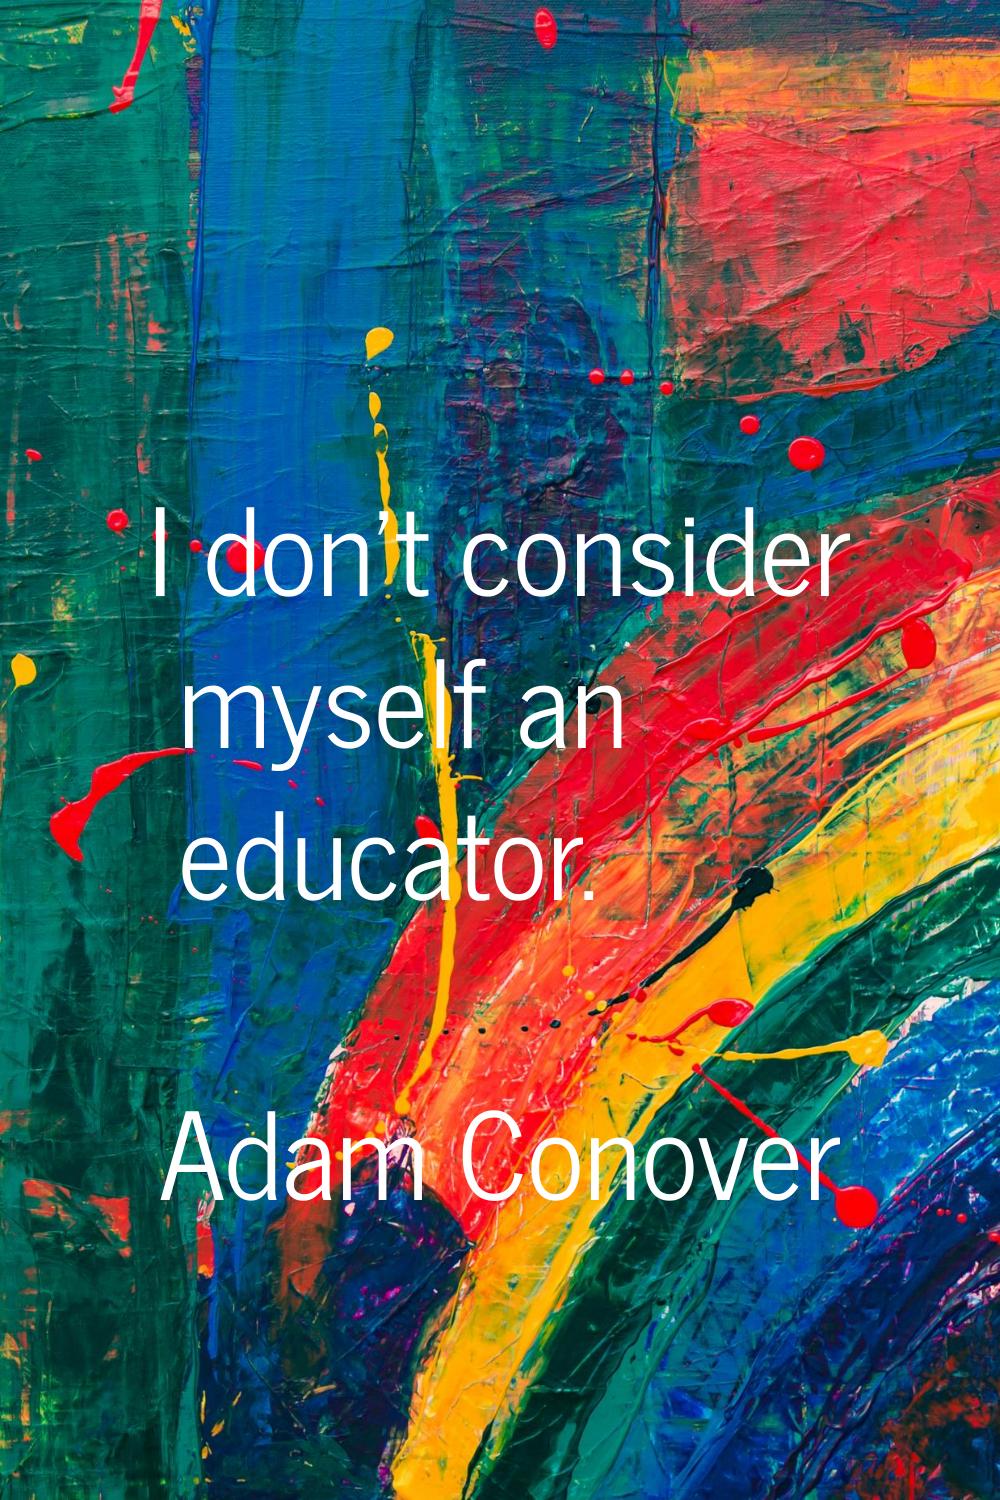 I don't consider myself an educator.